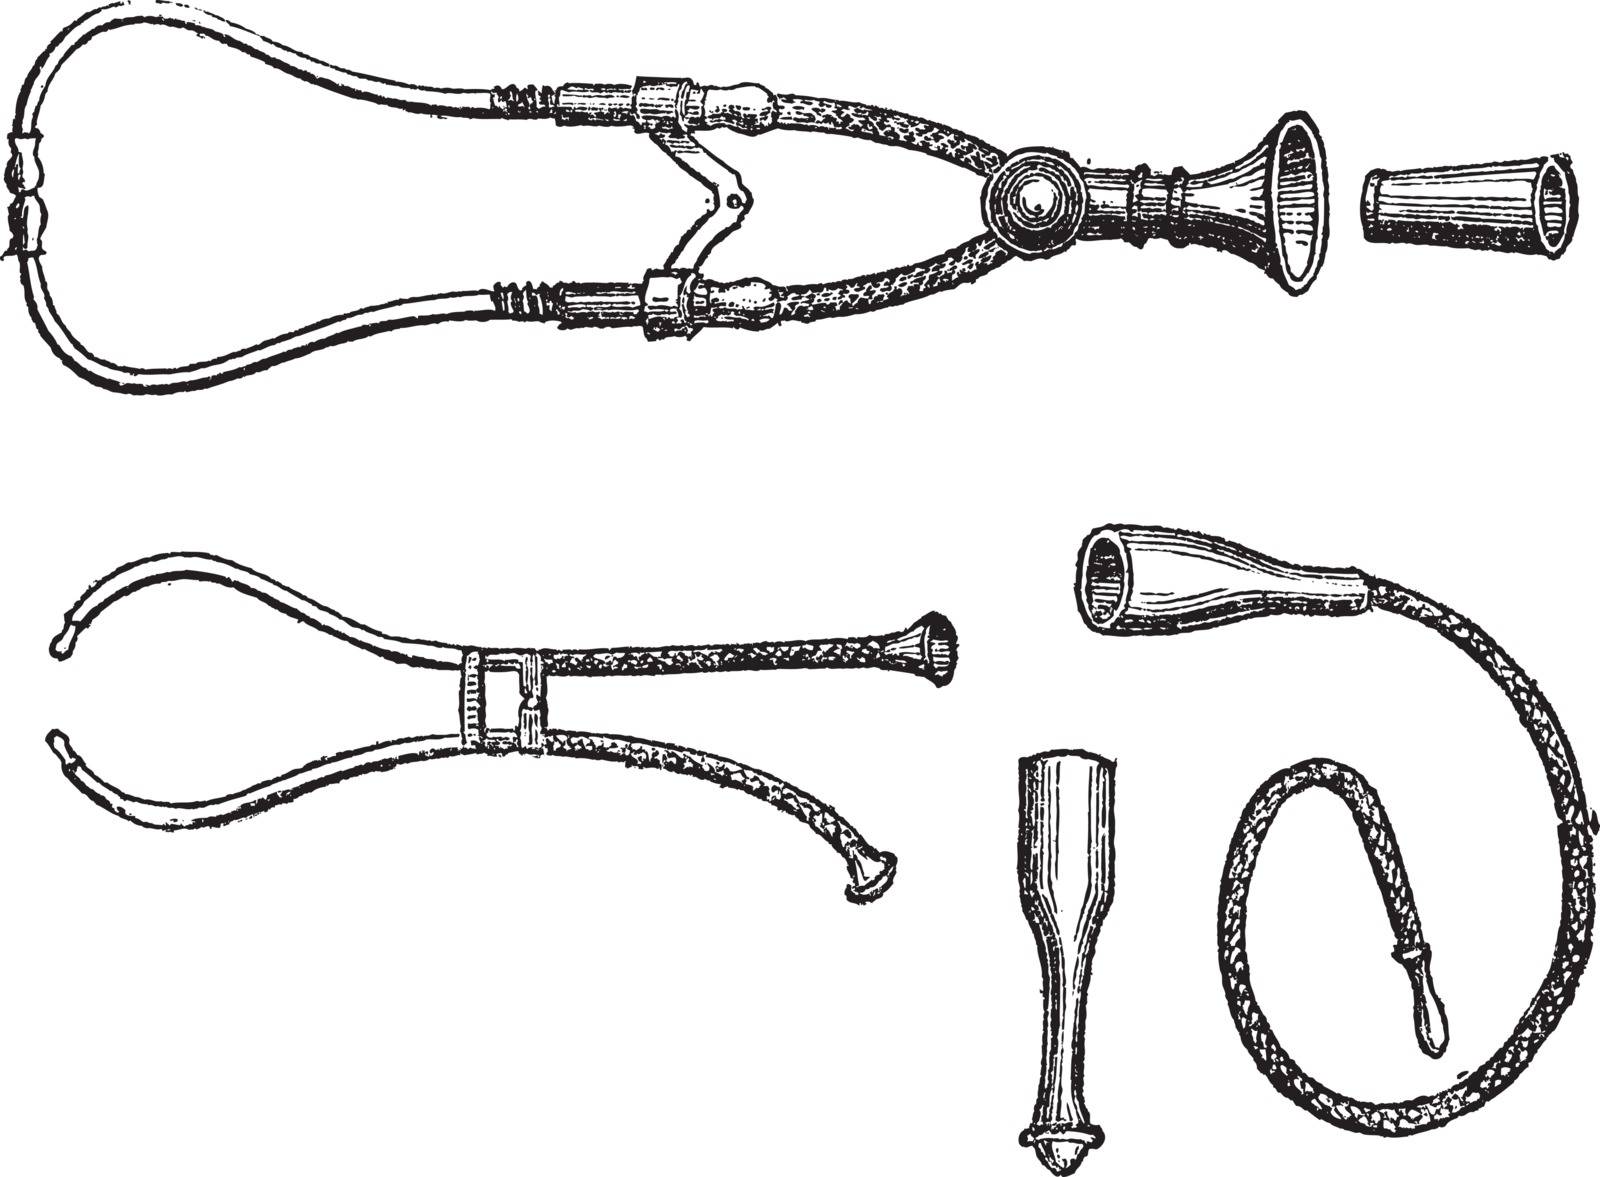 Stethoscopes, vintage engraving. Old engraved illustration of three types of Stethoscopes isolated on a white background.  